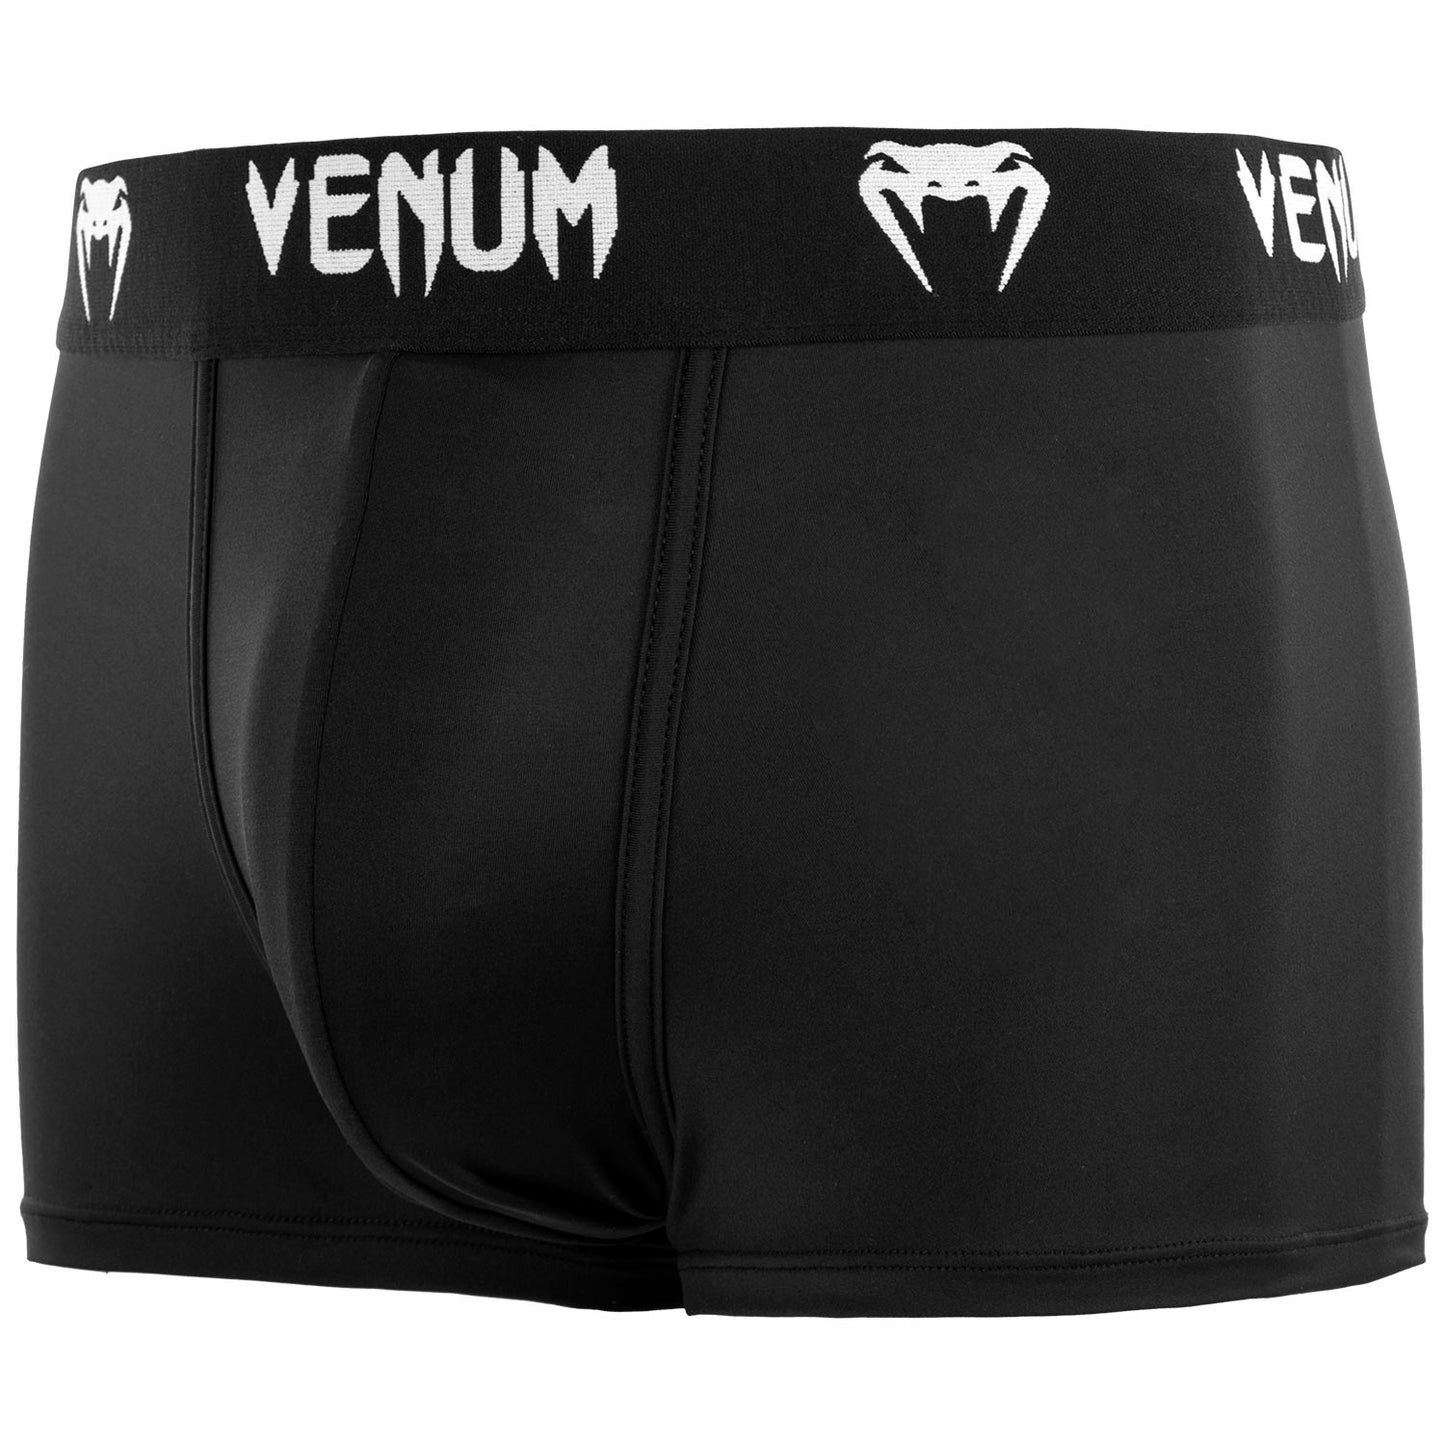 Venum Classic Boxer - Black/White